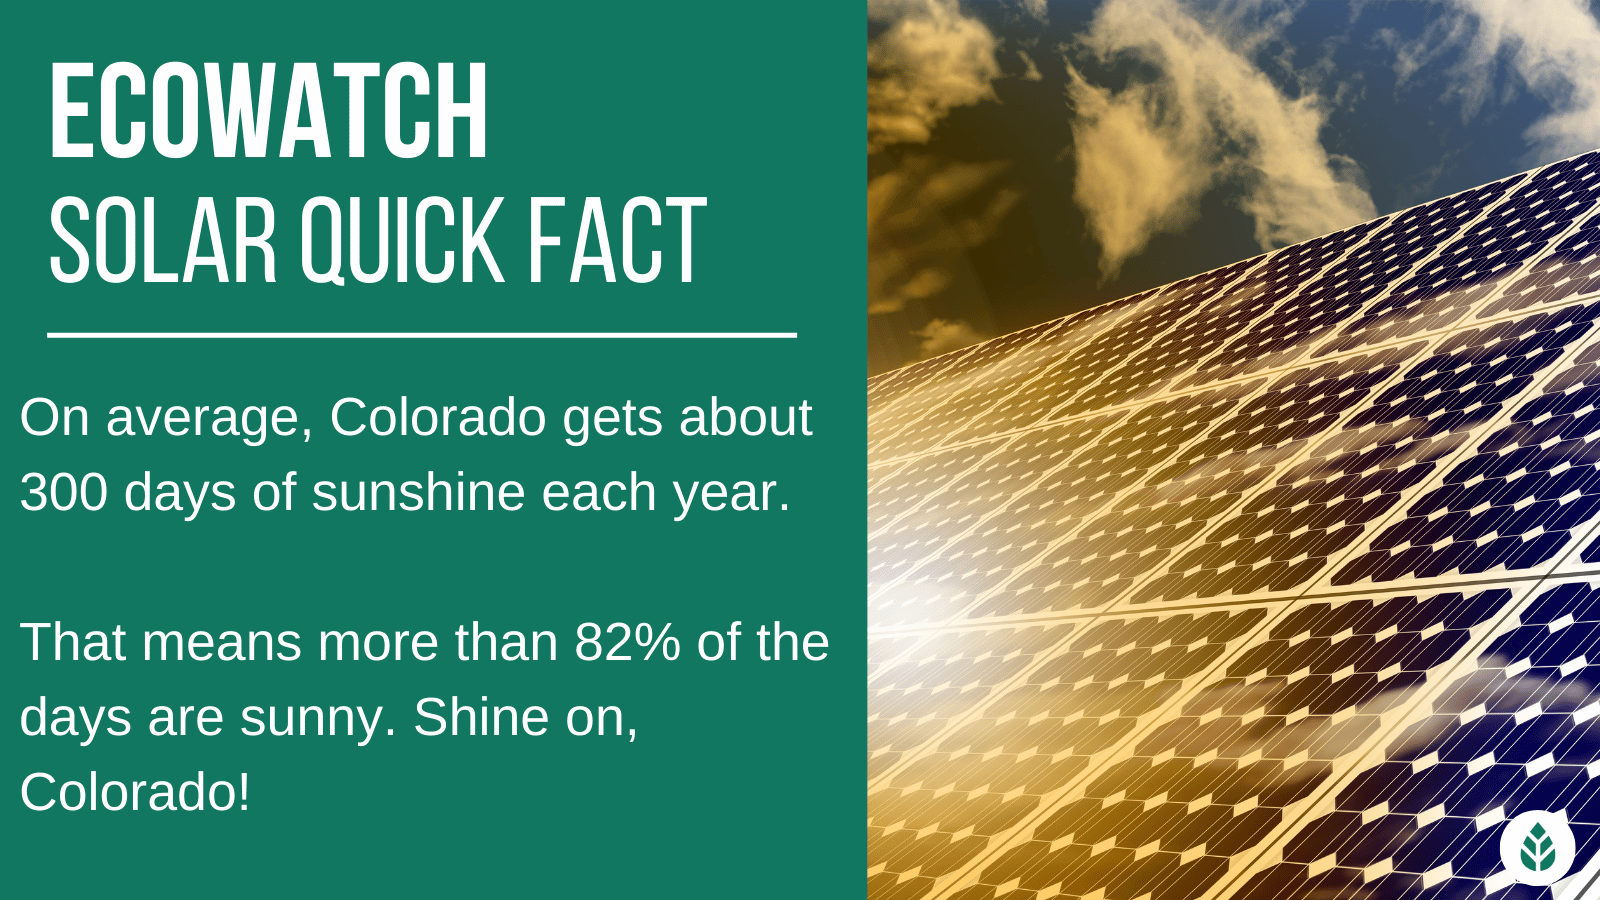 Colorado solar quick fact, colorado gets 300 days of sunshine each year